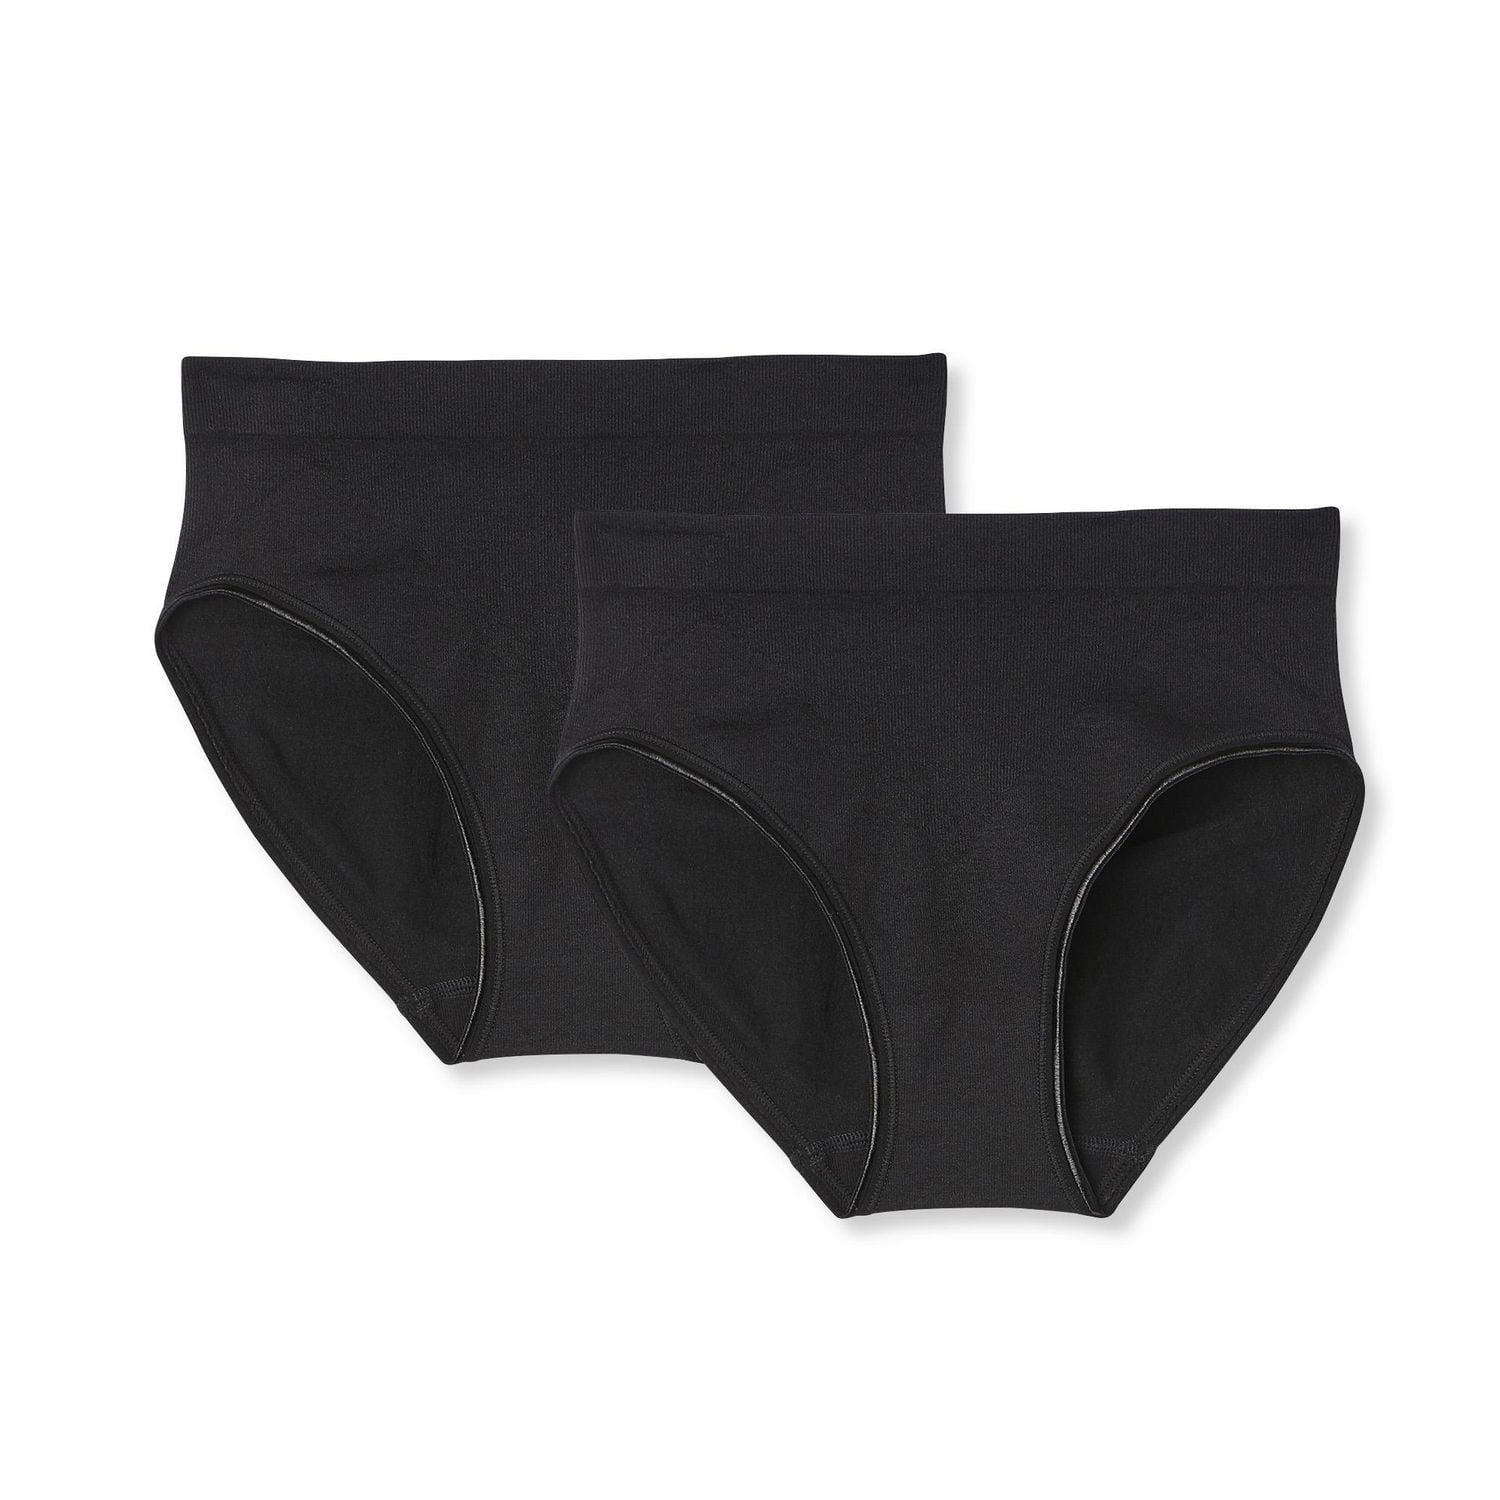 Buy Clever Travel Companion Women's Underwear with 2 Secret Zipper